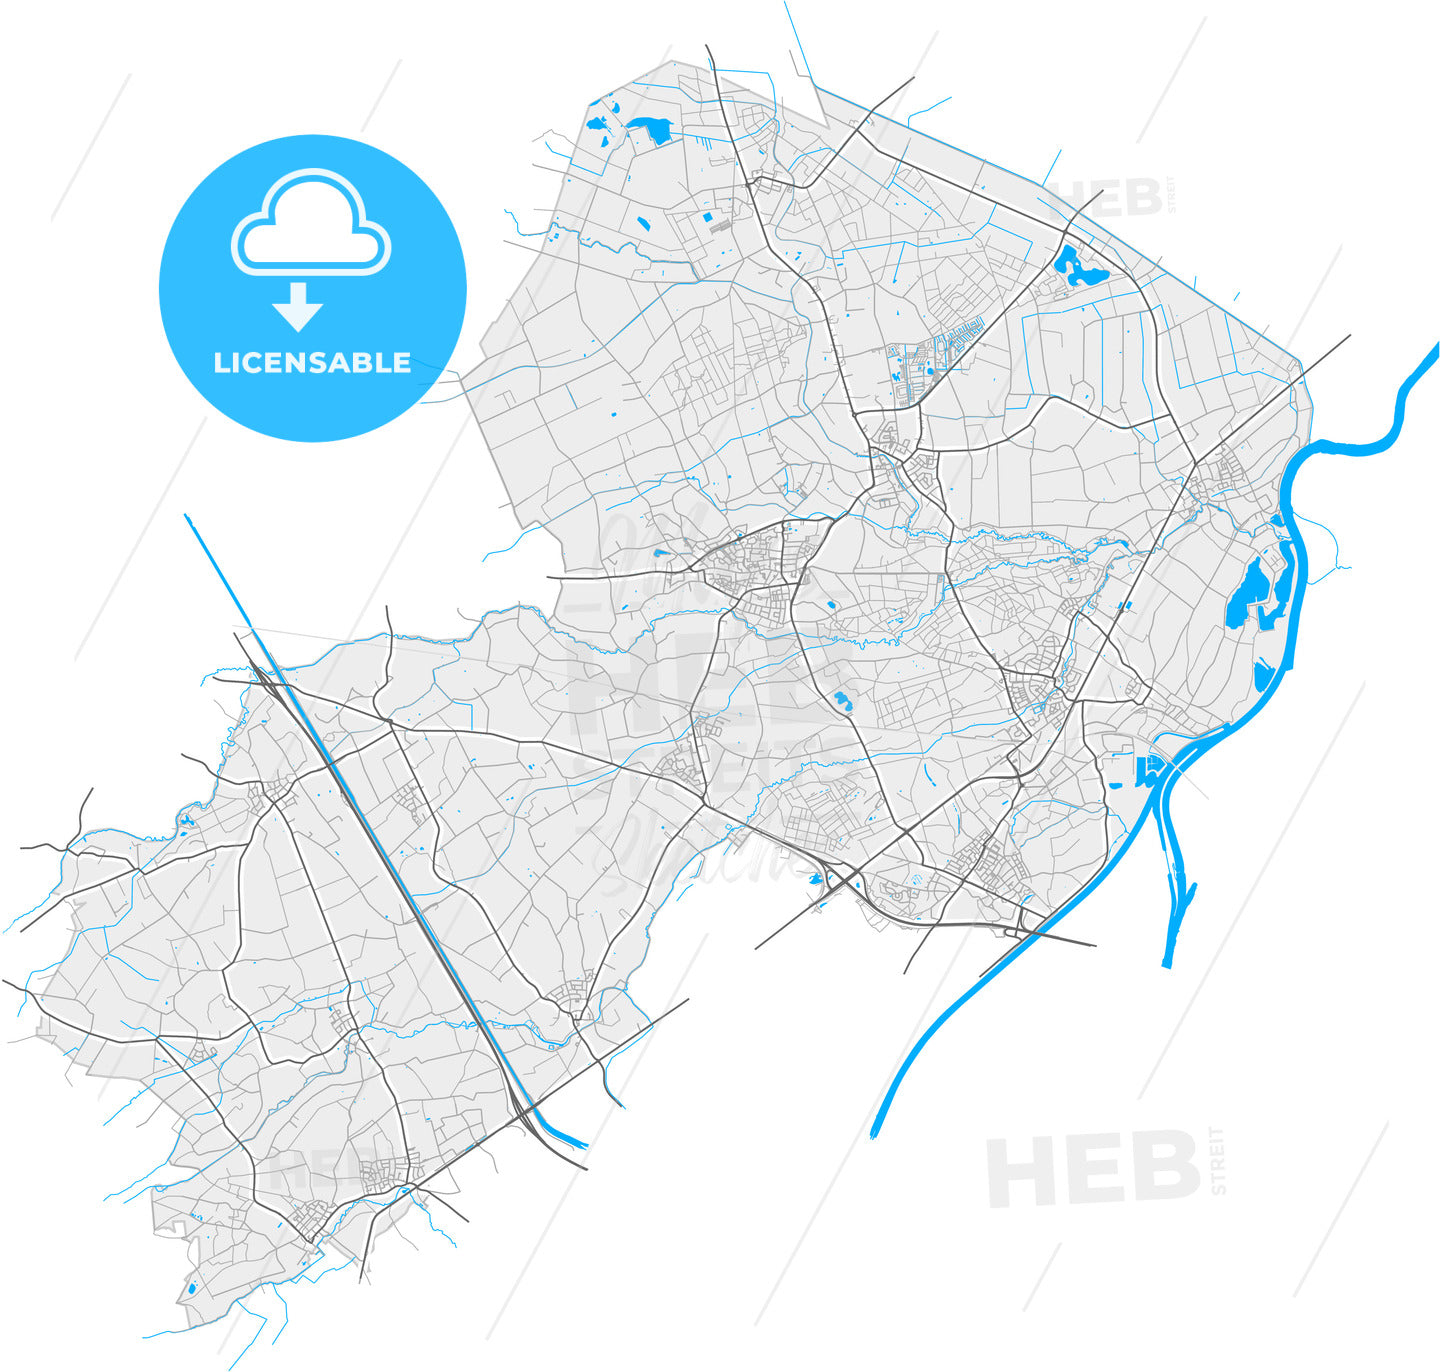 Leudal, Limburg, Netherlands, high quality vector map